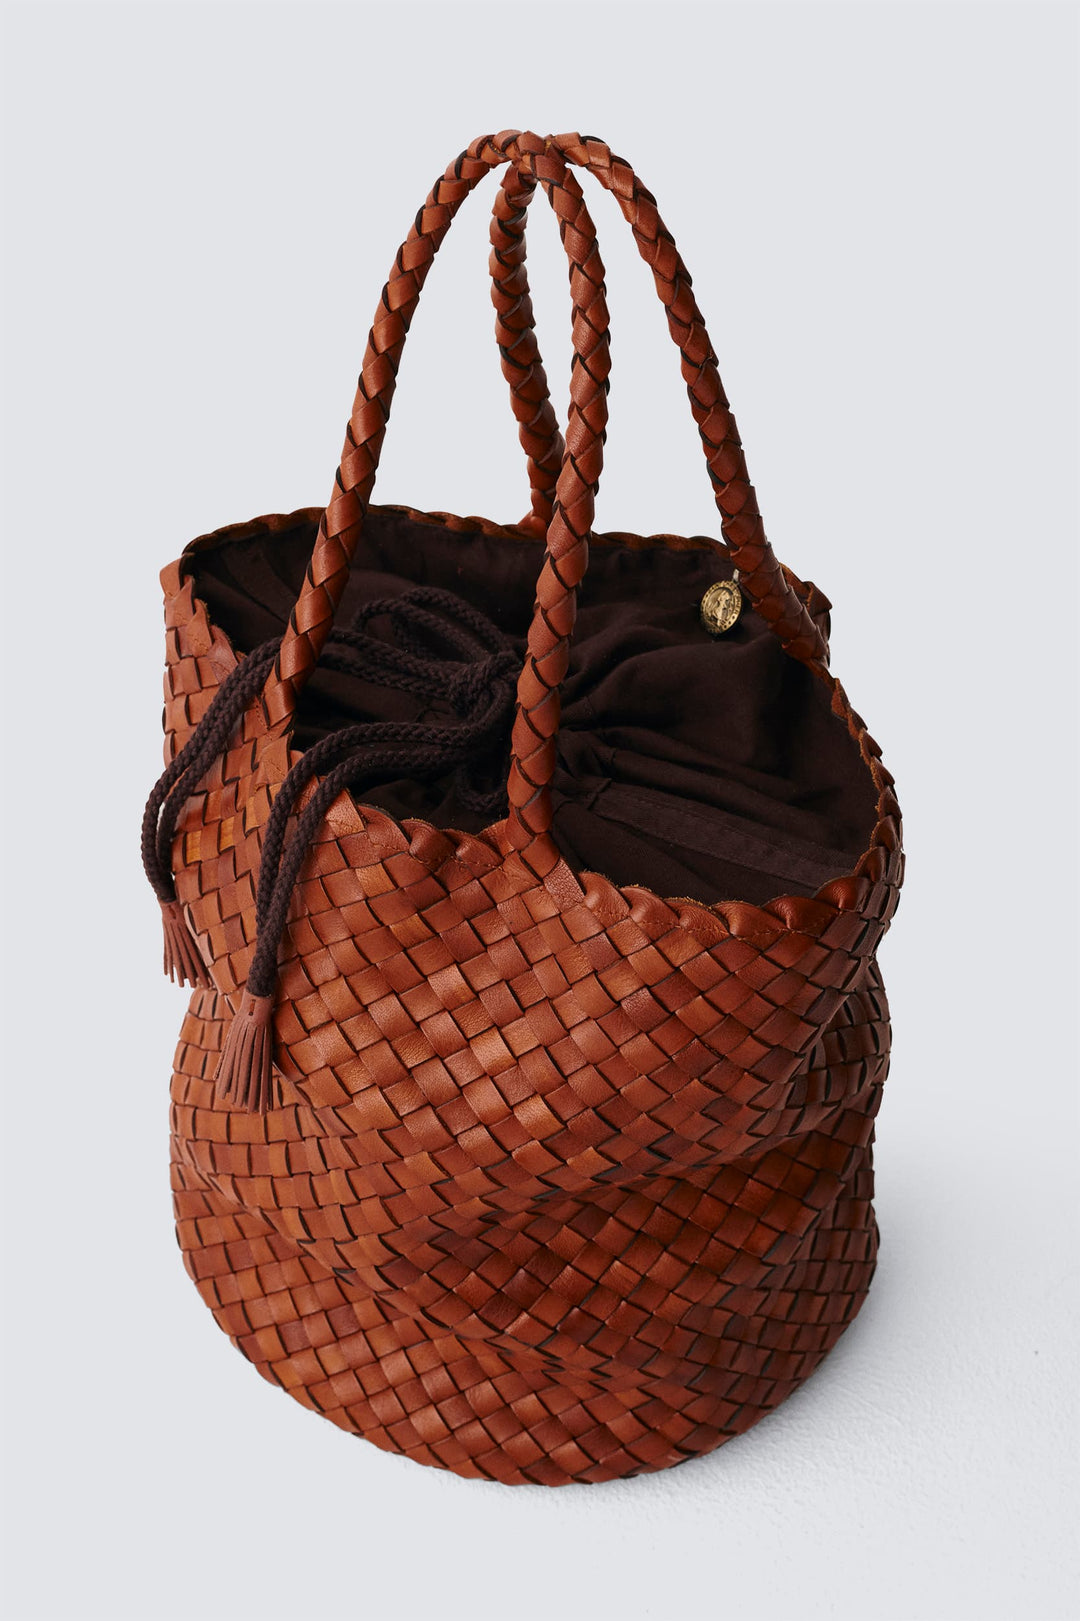 Dragon Diffusion woven leather bag handmade - Jacky Bucket w/ lining Tan